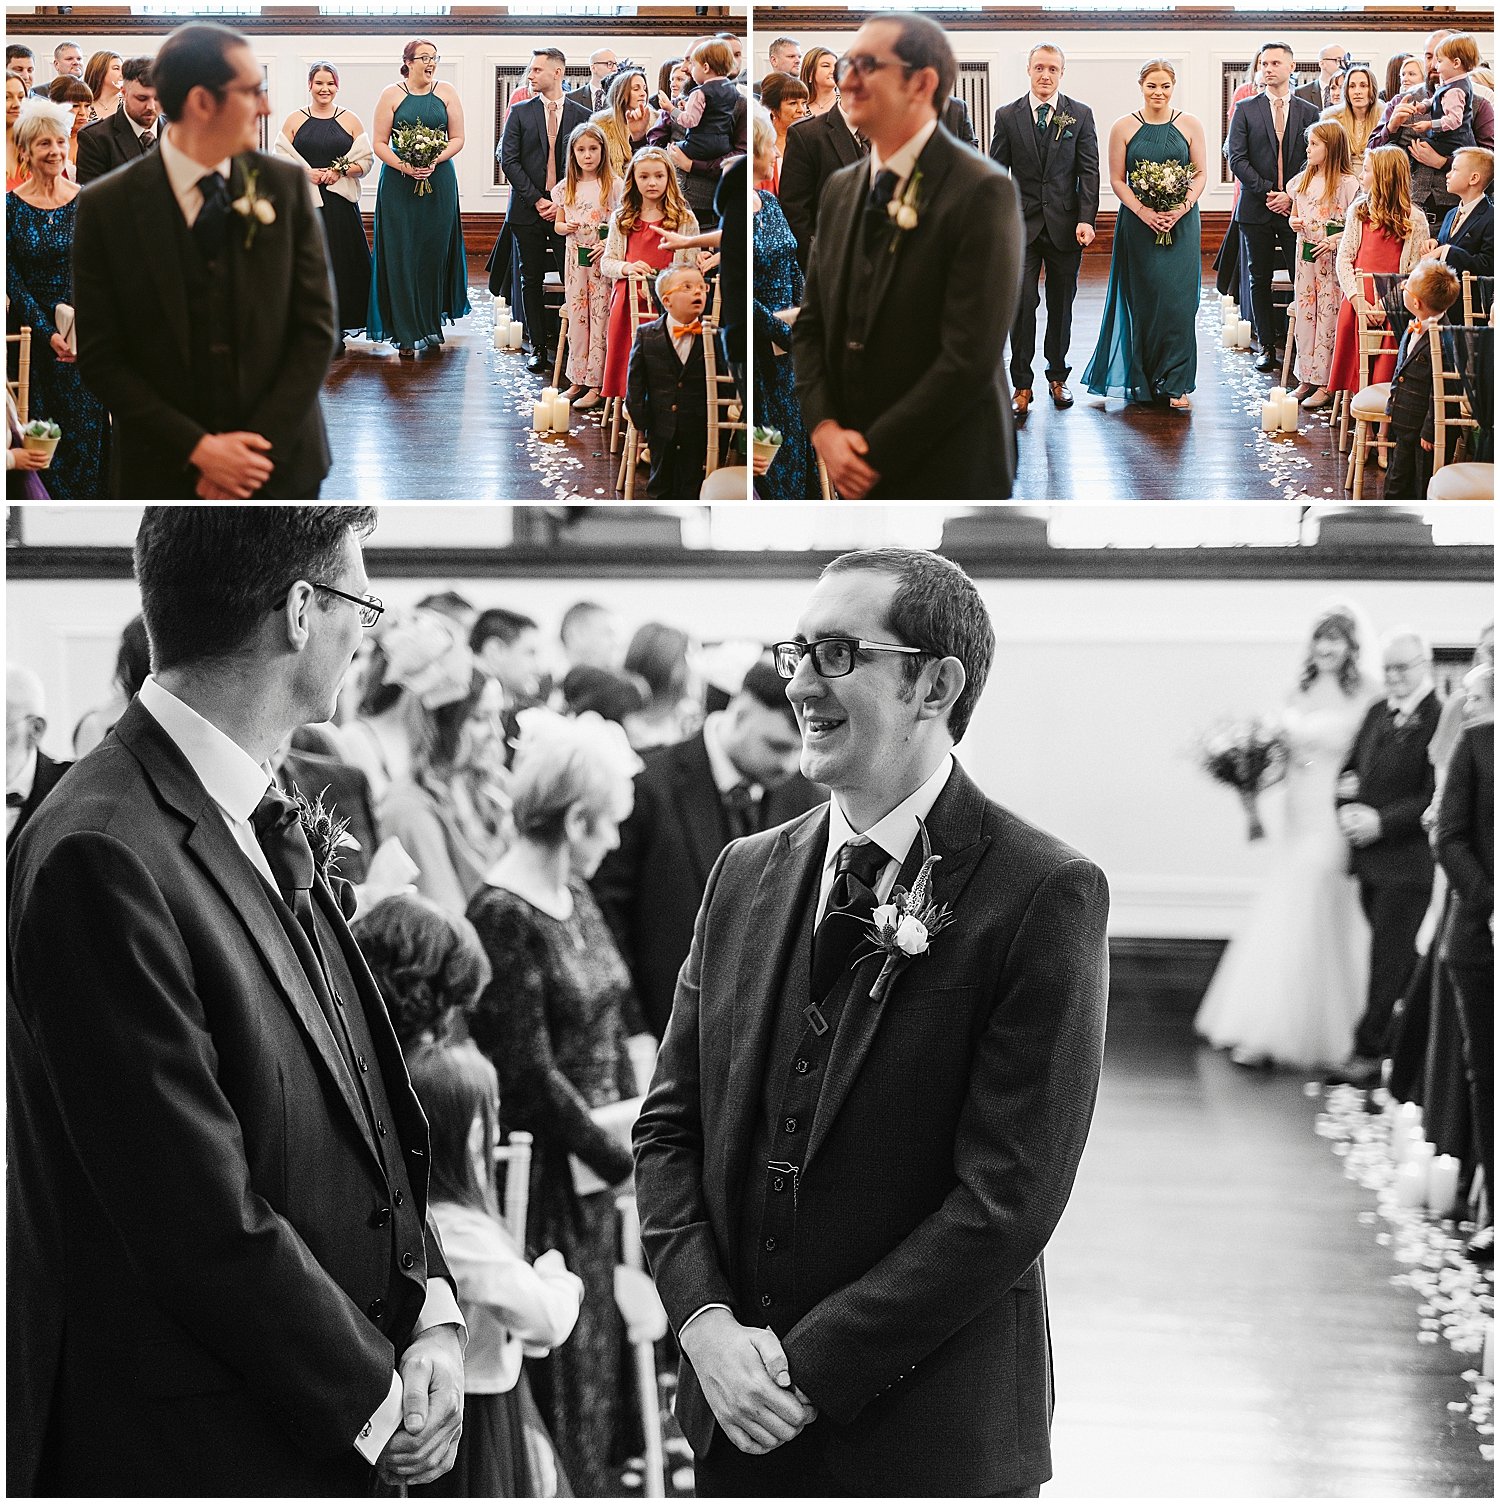 Beamish Hall wedding photos - Danielle and Robert 023.JPG